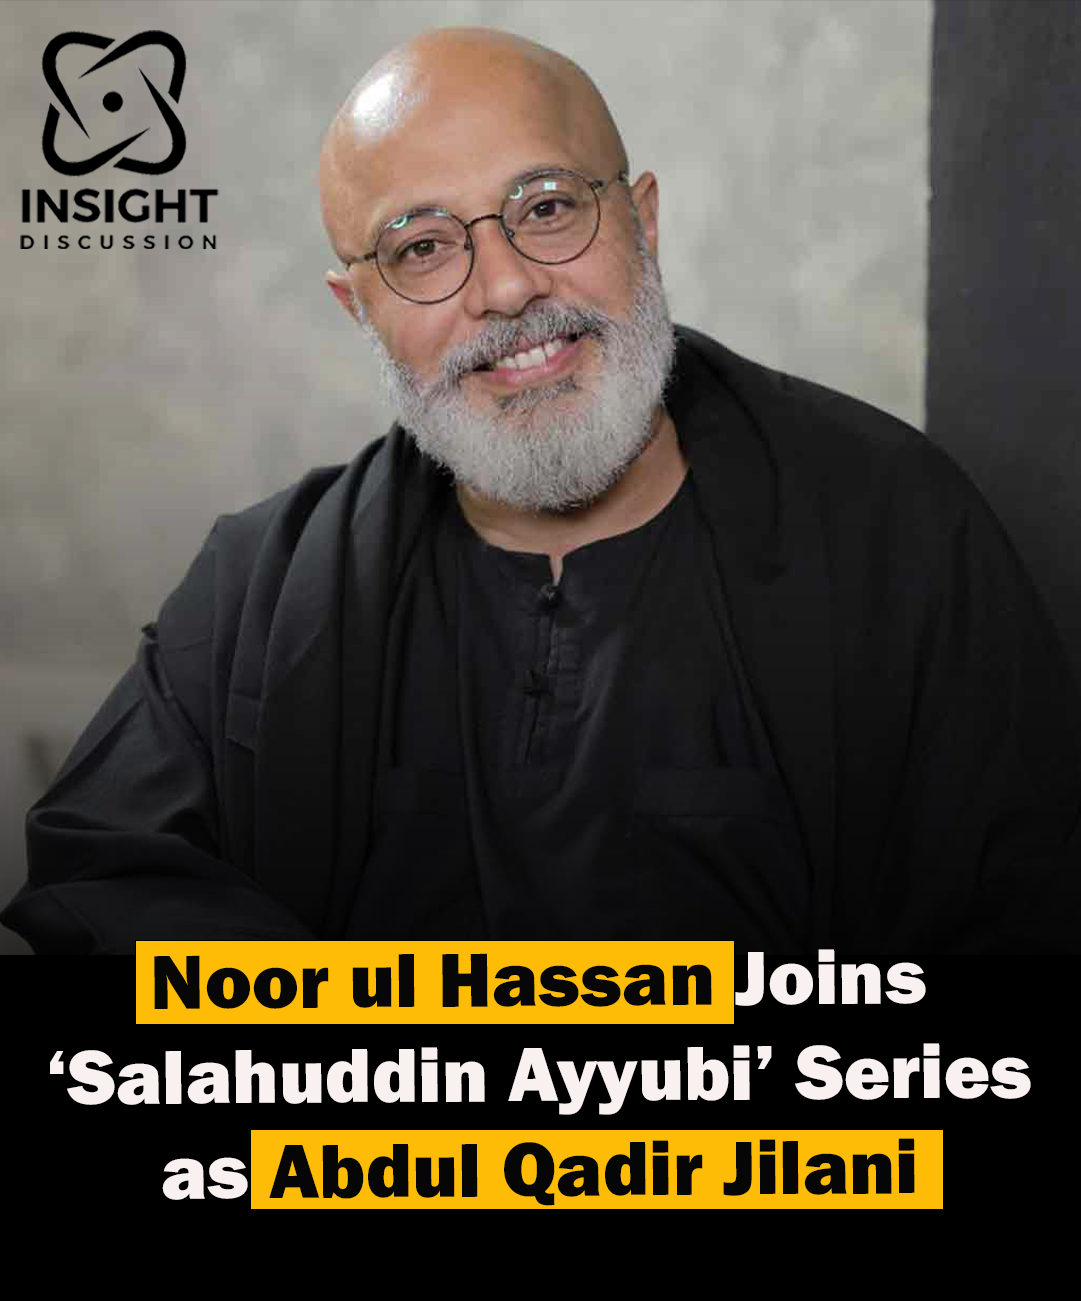 Anticipated ‘Salahuddin Ayyubi’ Series to Feature Noor ul Hassan in Groundbreaking Role